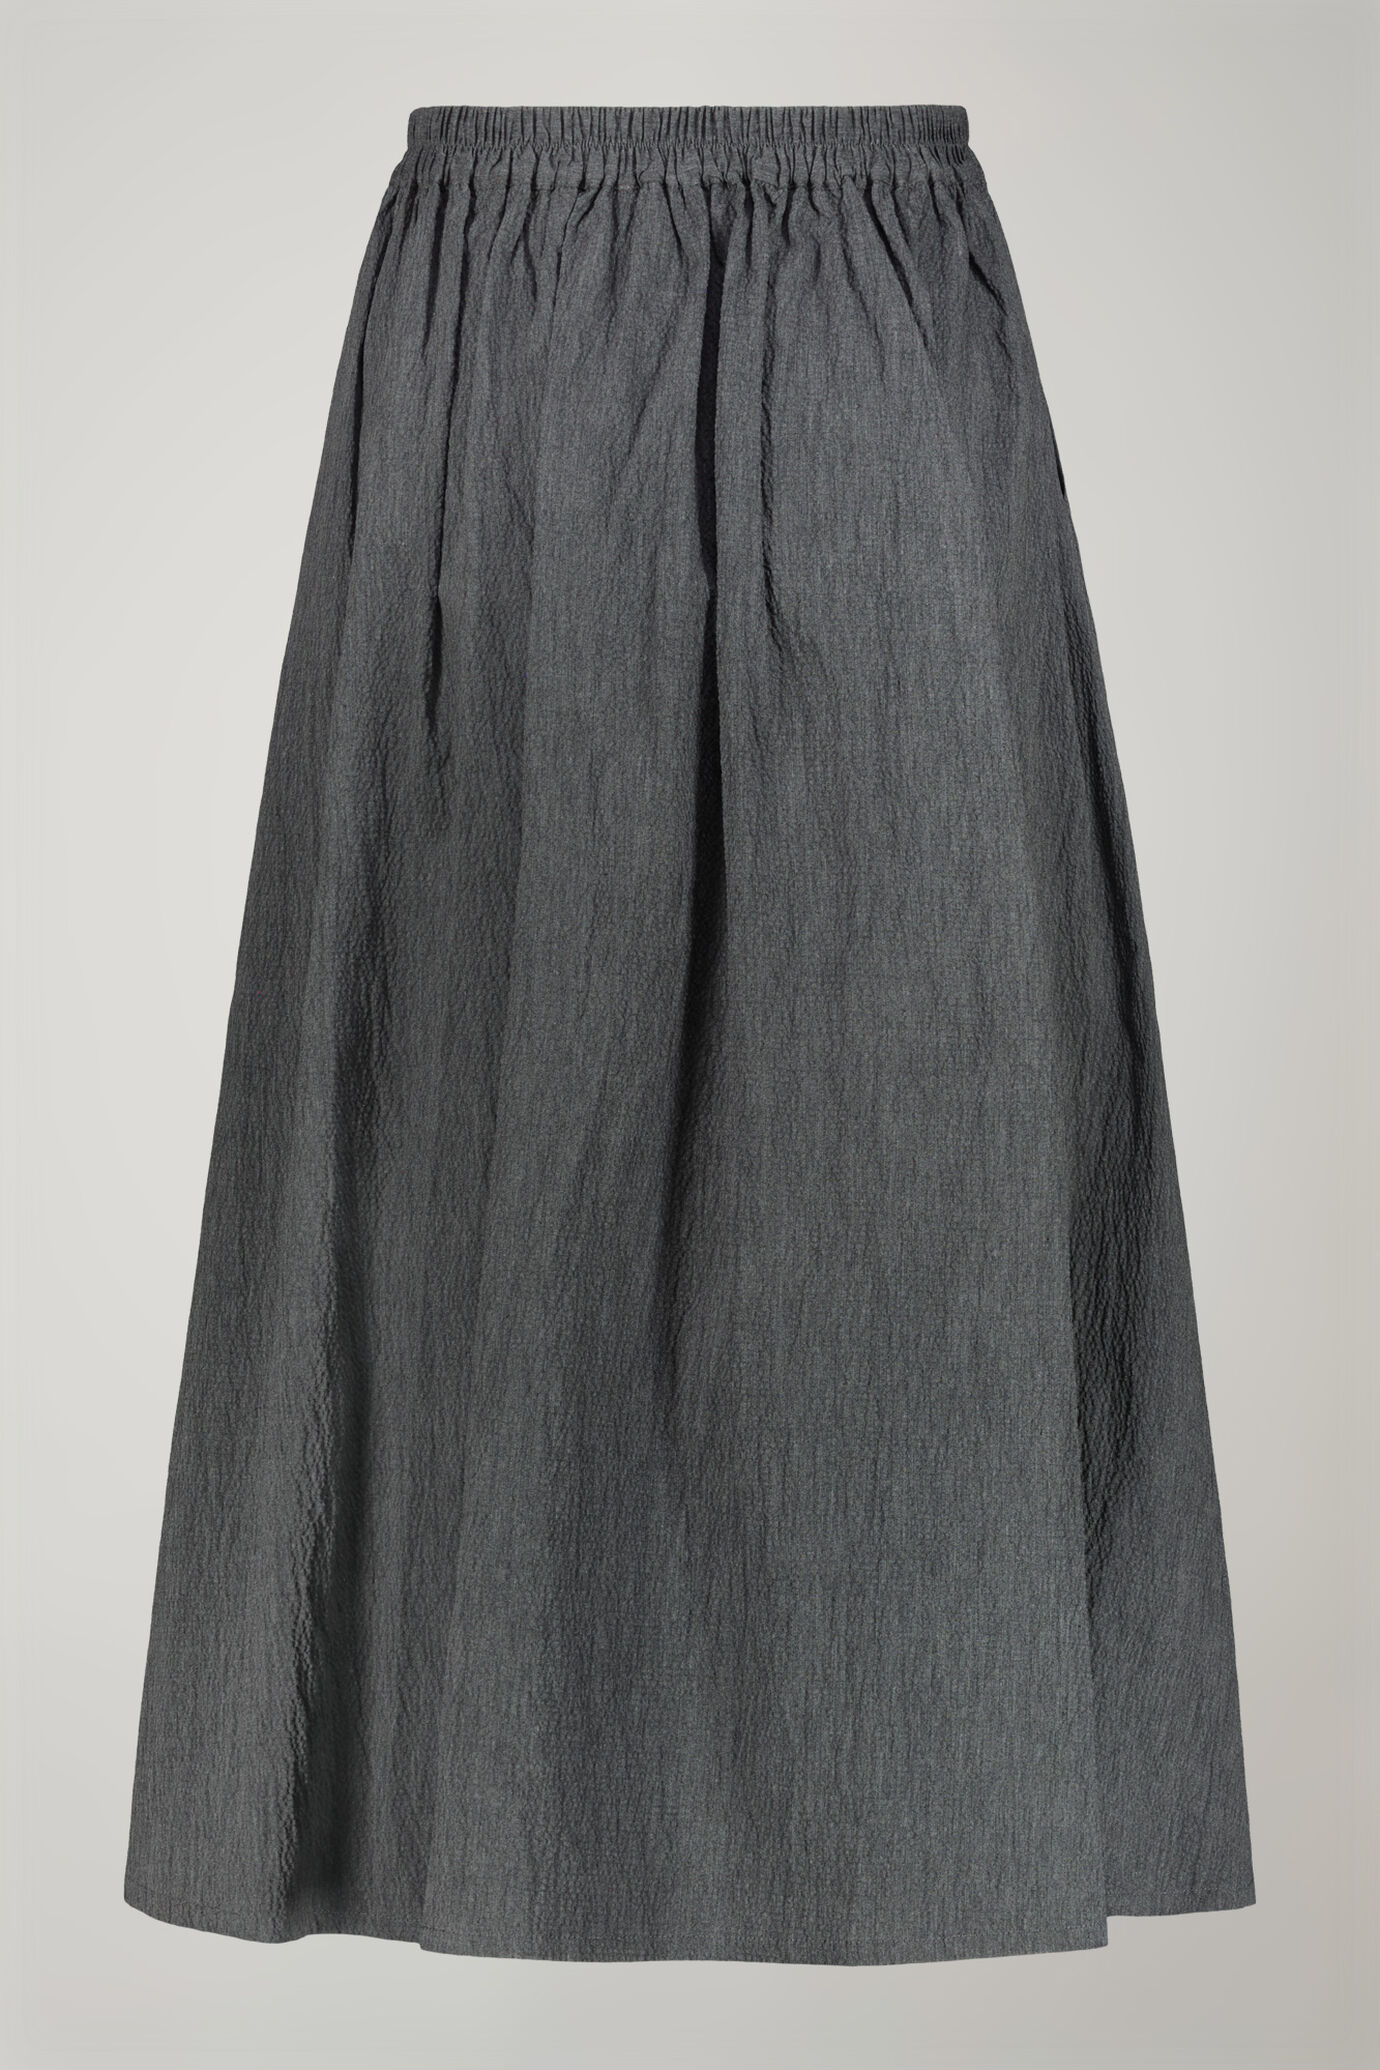 Women's solid color embossed cotton skirt regular fit image number 5